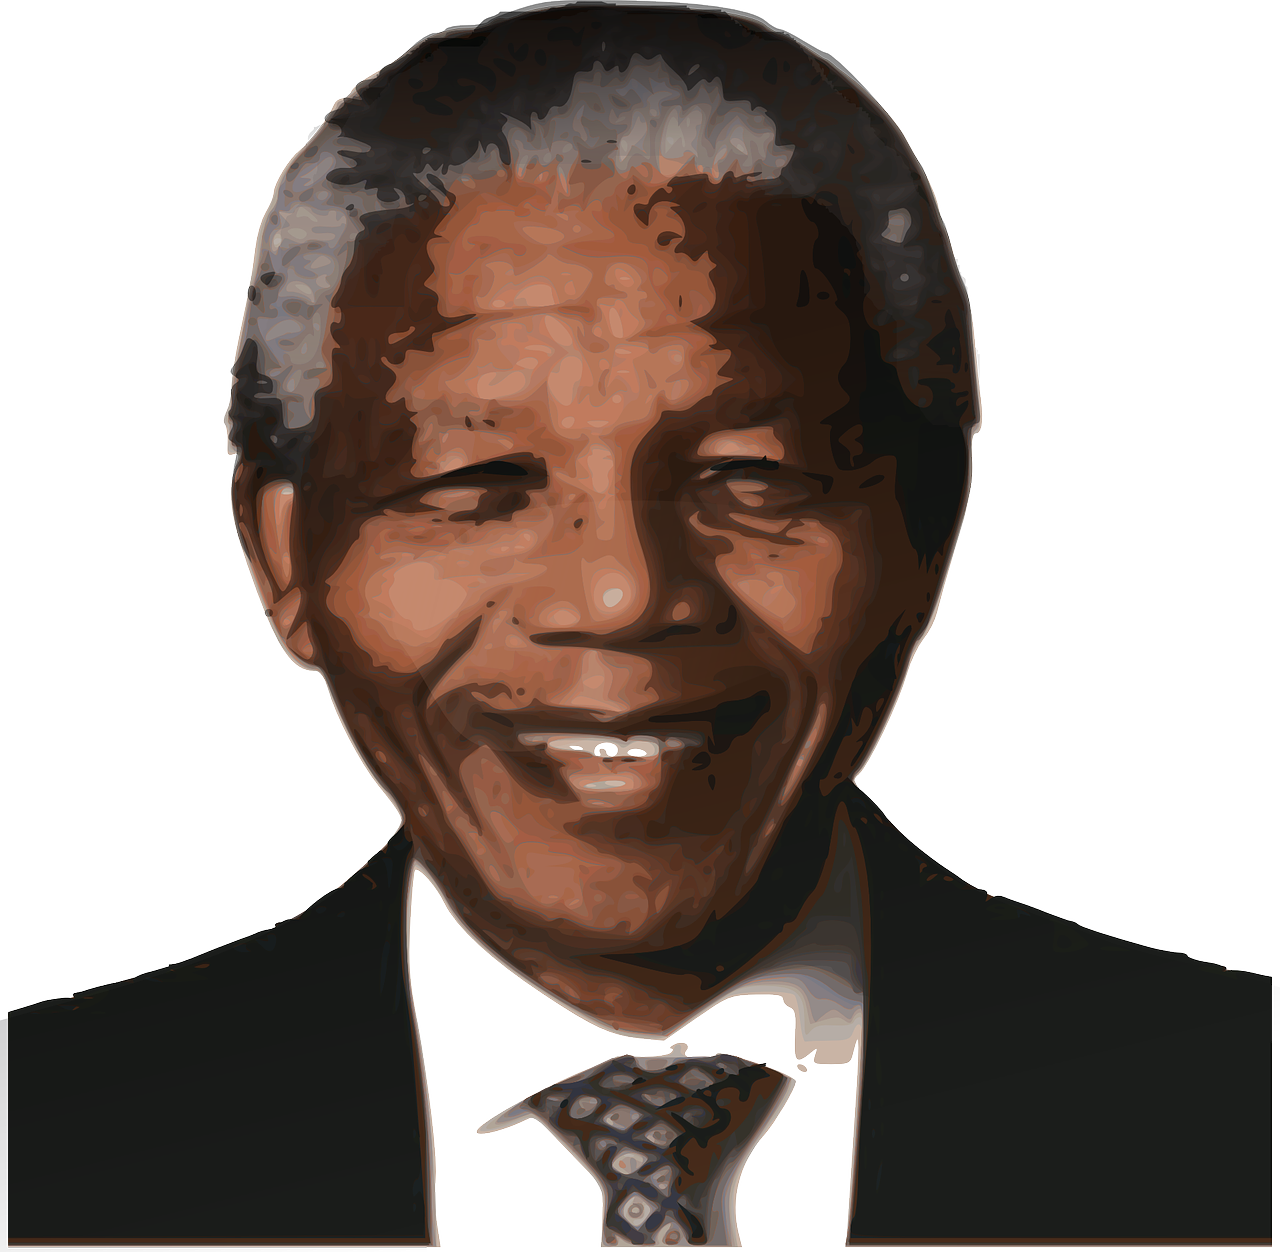 Nelson Mandela died in prison